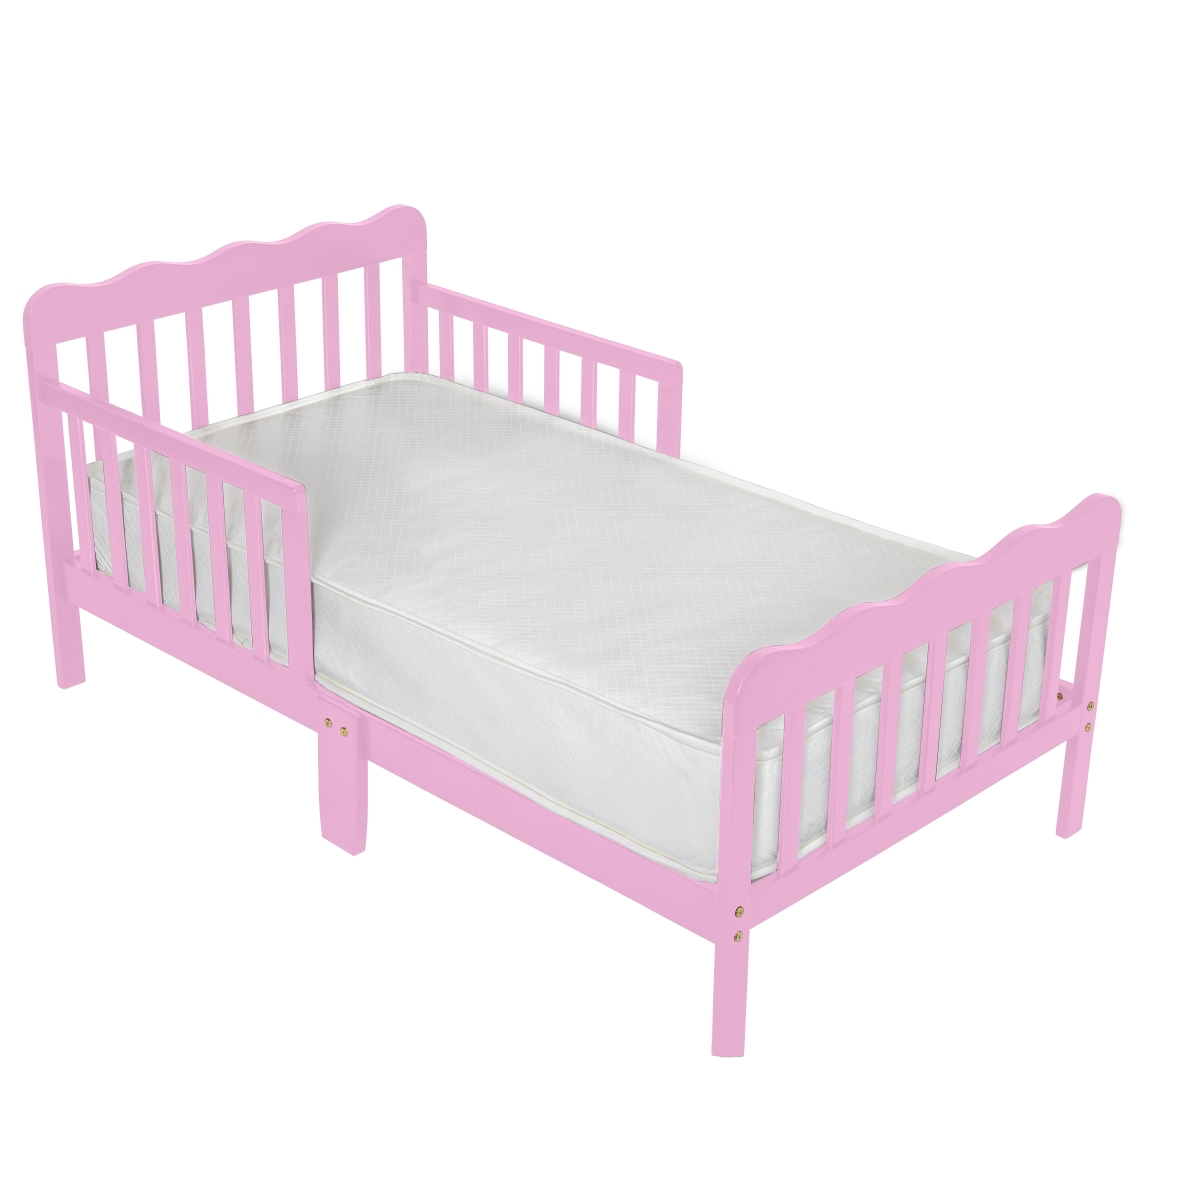 830-p Wood Toddler Bed, Pink